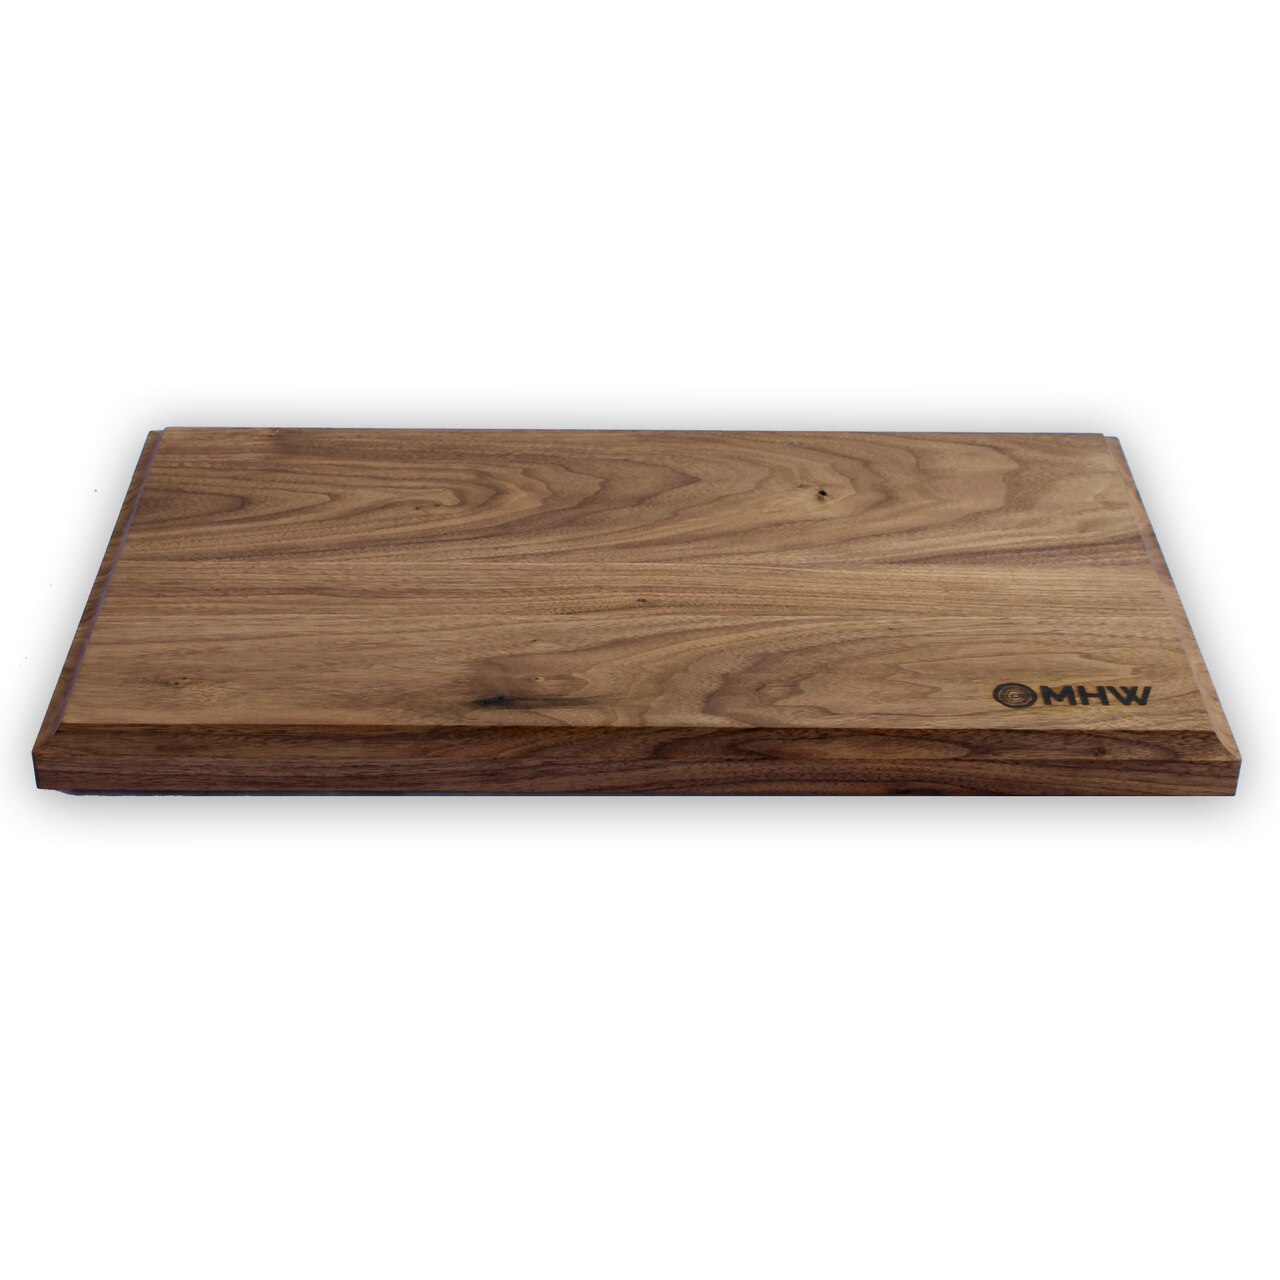 https://www.woodcuttingboardstore.com/wp-content/uploads/2020/06/14x24x1.5-Thick-Walnut-Wood-Cutting-Board-wFREE-Board-Butter1.jpg